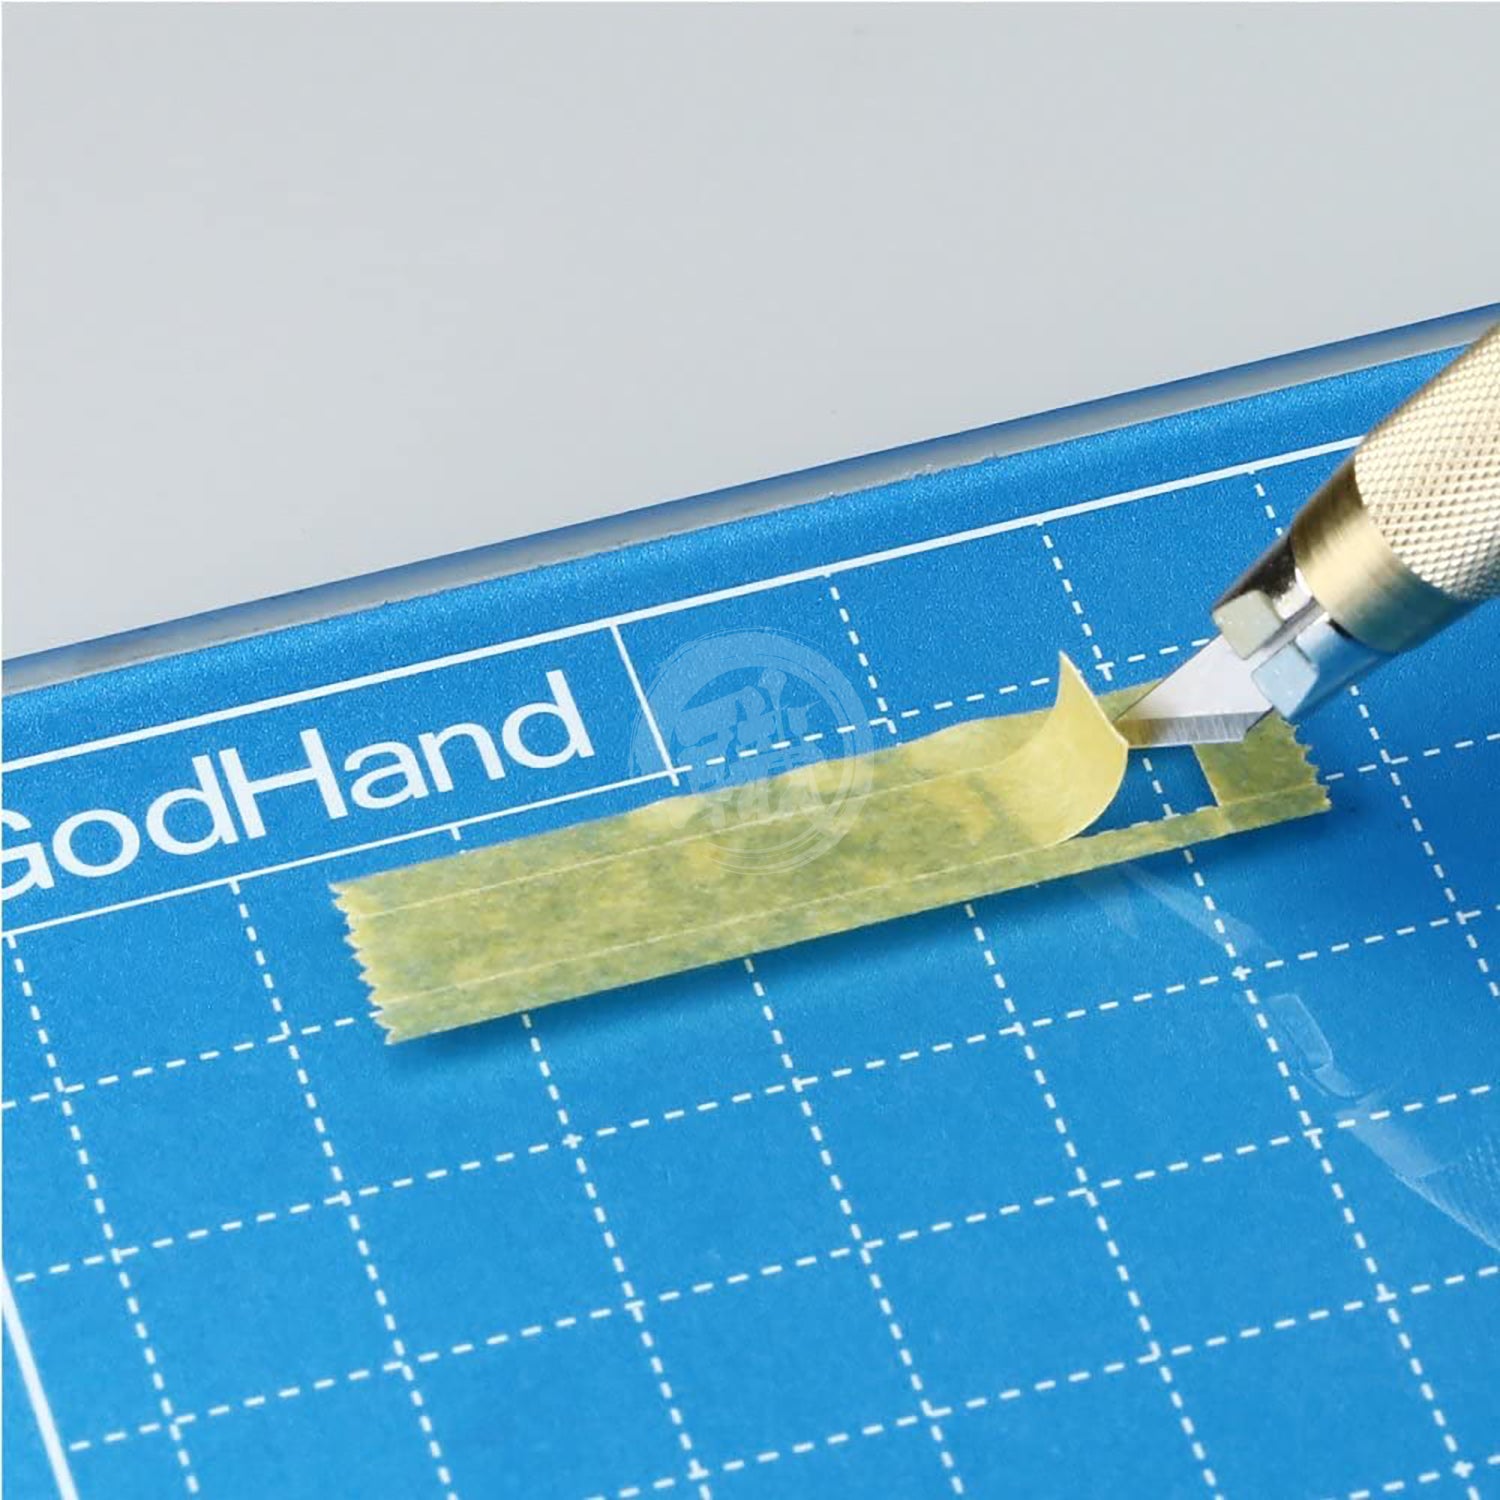 Godhand Tools - Glass Cutter Mat - ShokuninGunpla